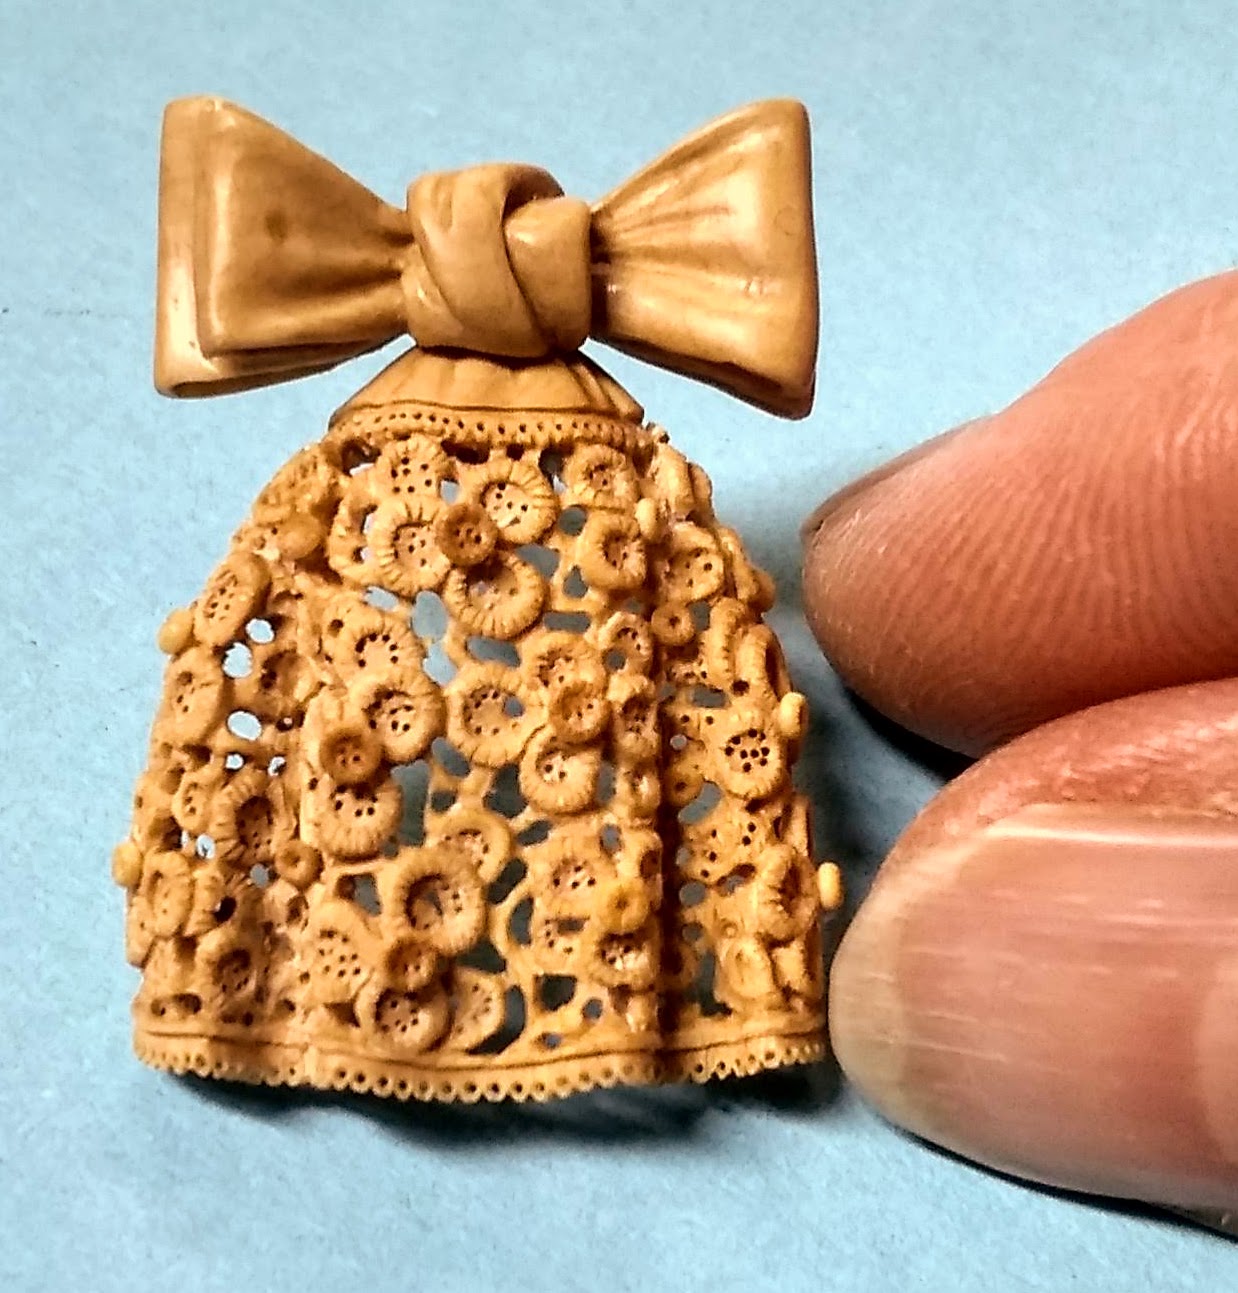 closeup pic of miniature replica of Gibbons' famous cravat